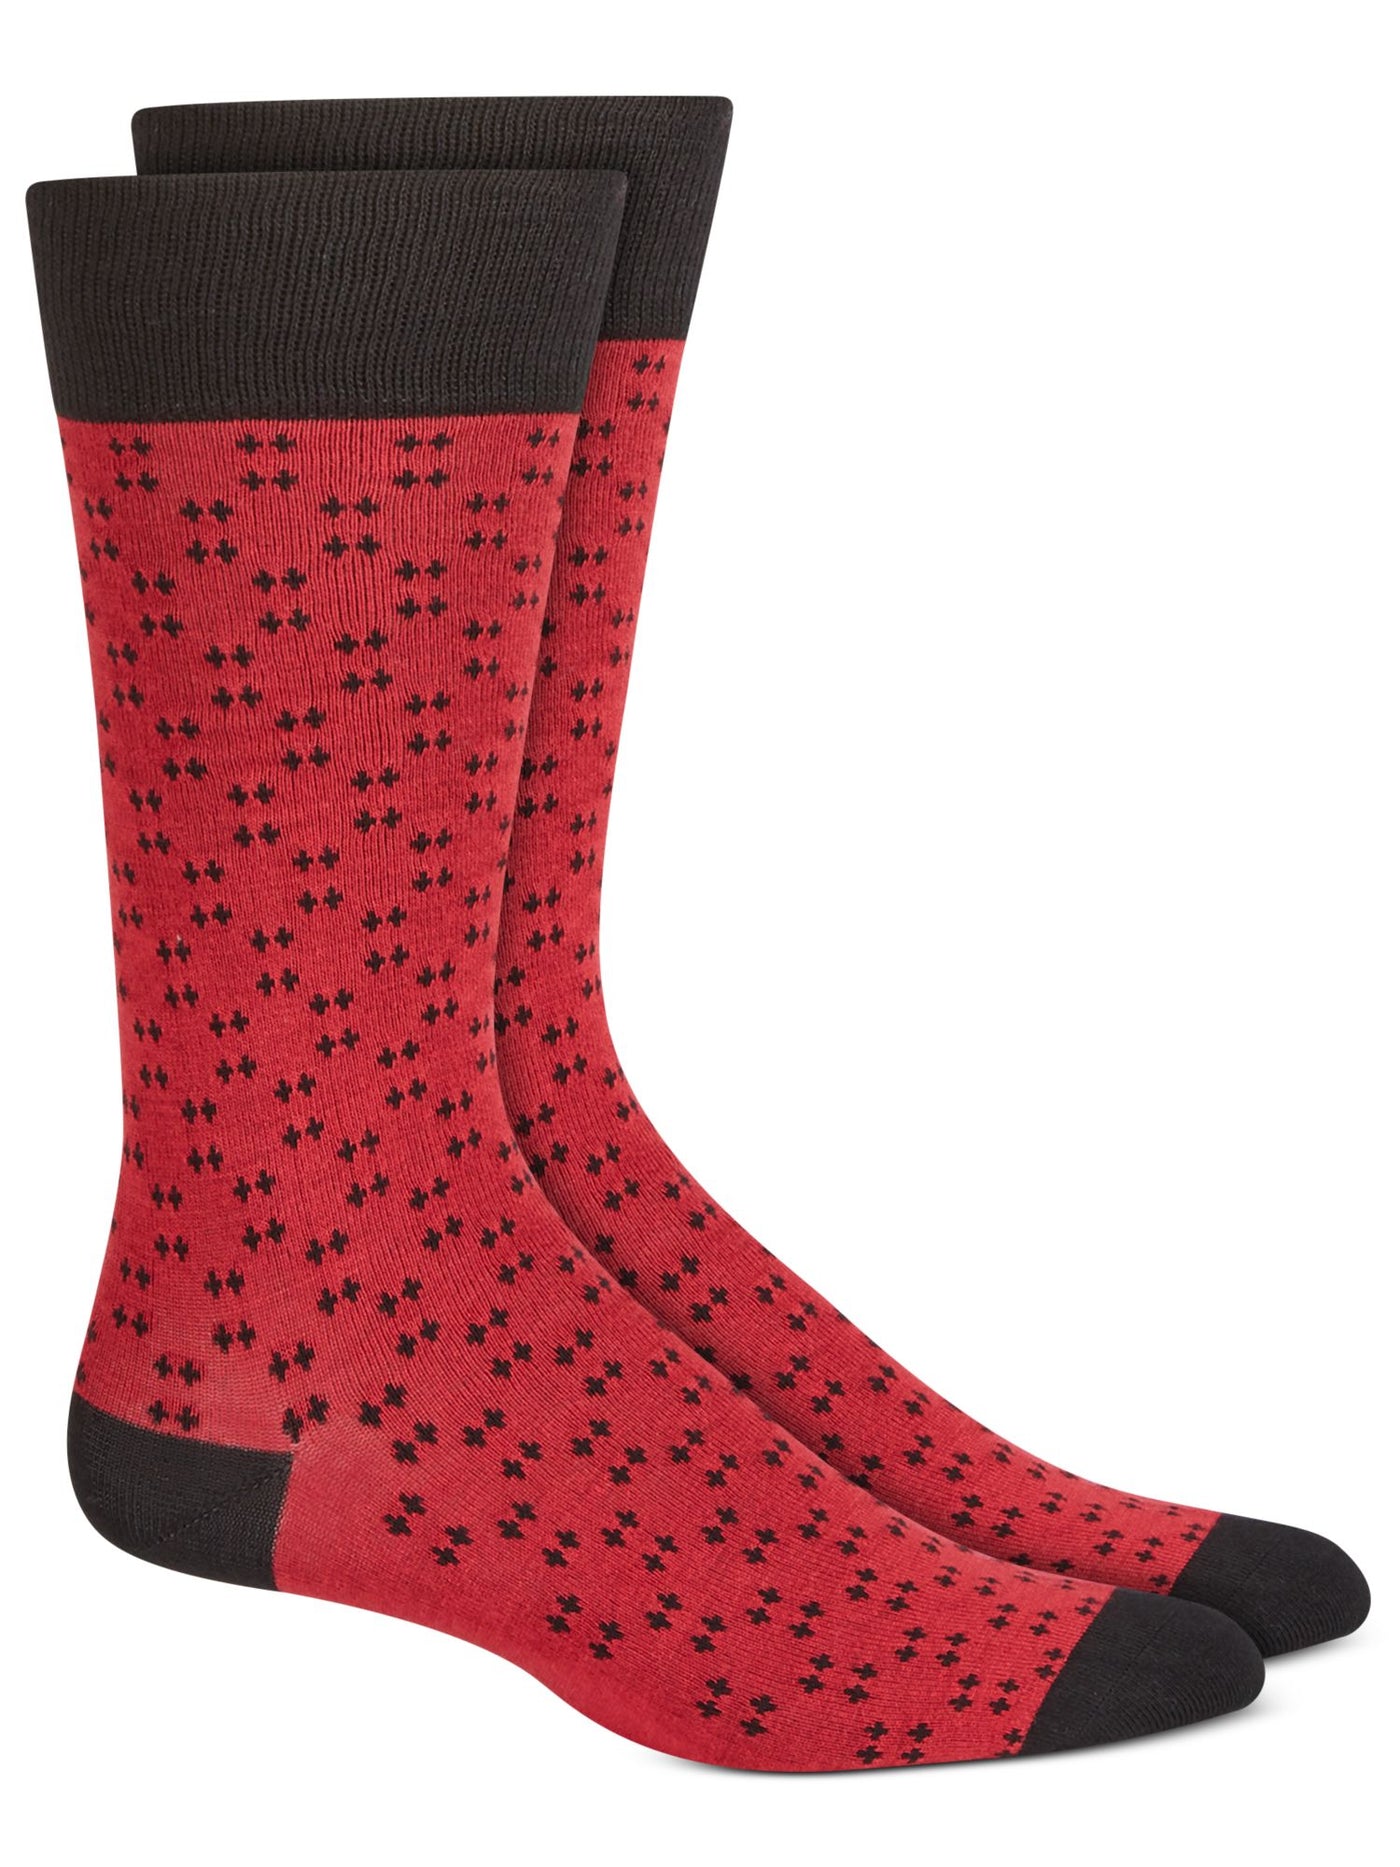 ALFANI Mens Red Rayon Printed Moisture Wicking Casual Crew Socks 7-12